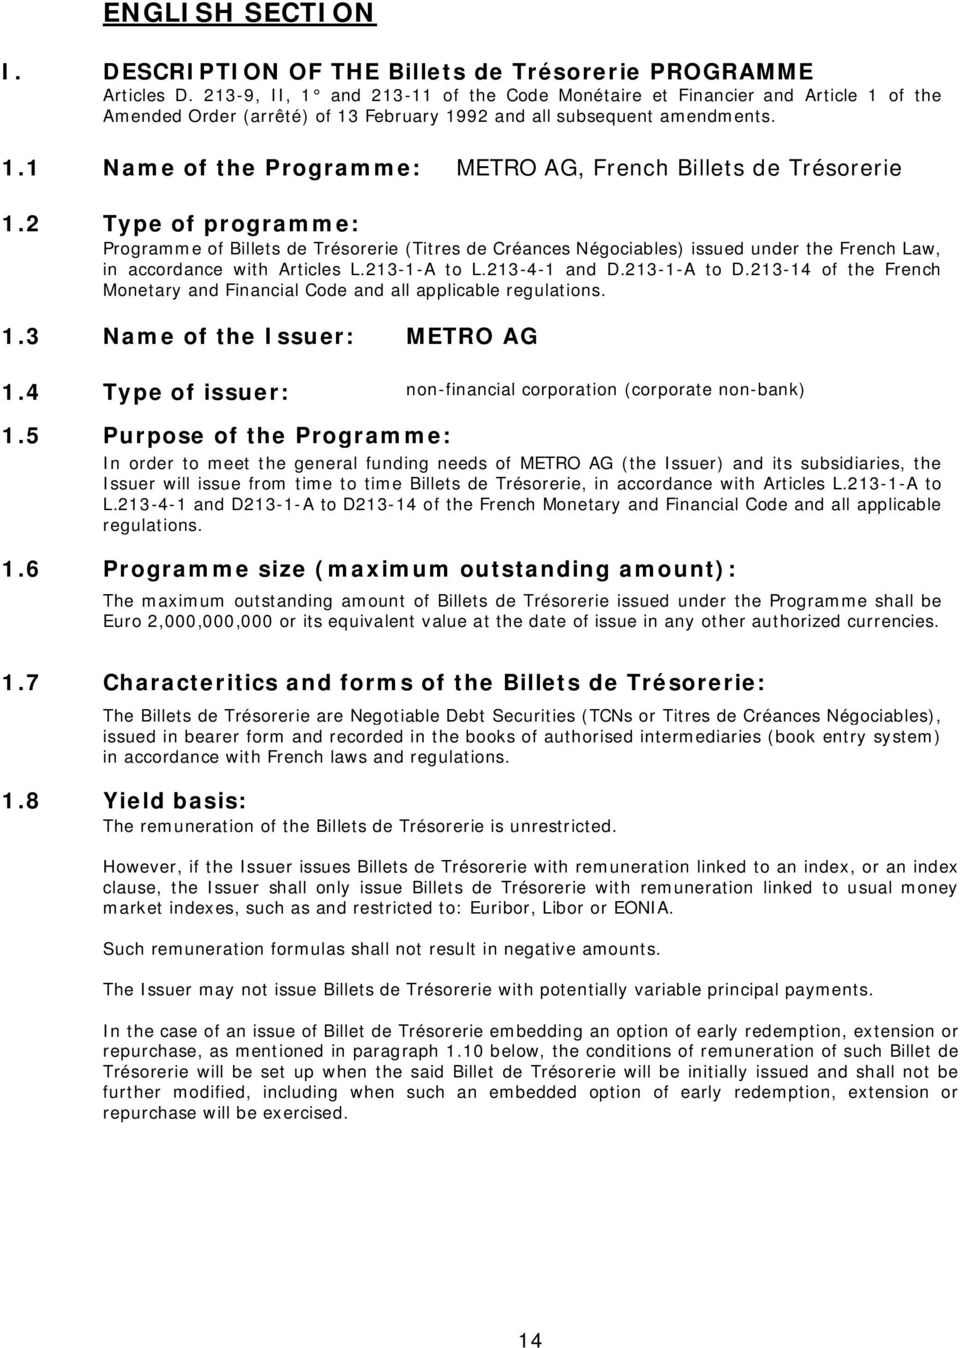 2 Type of programme: Programme of Billets de Trésorerie (Titres de Créances Négociables) issued under the French Law, in accordance with Articles L.213-1-A to L.213-4-1 and D.213-1-A to D.